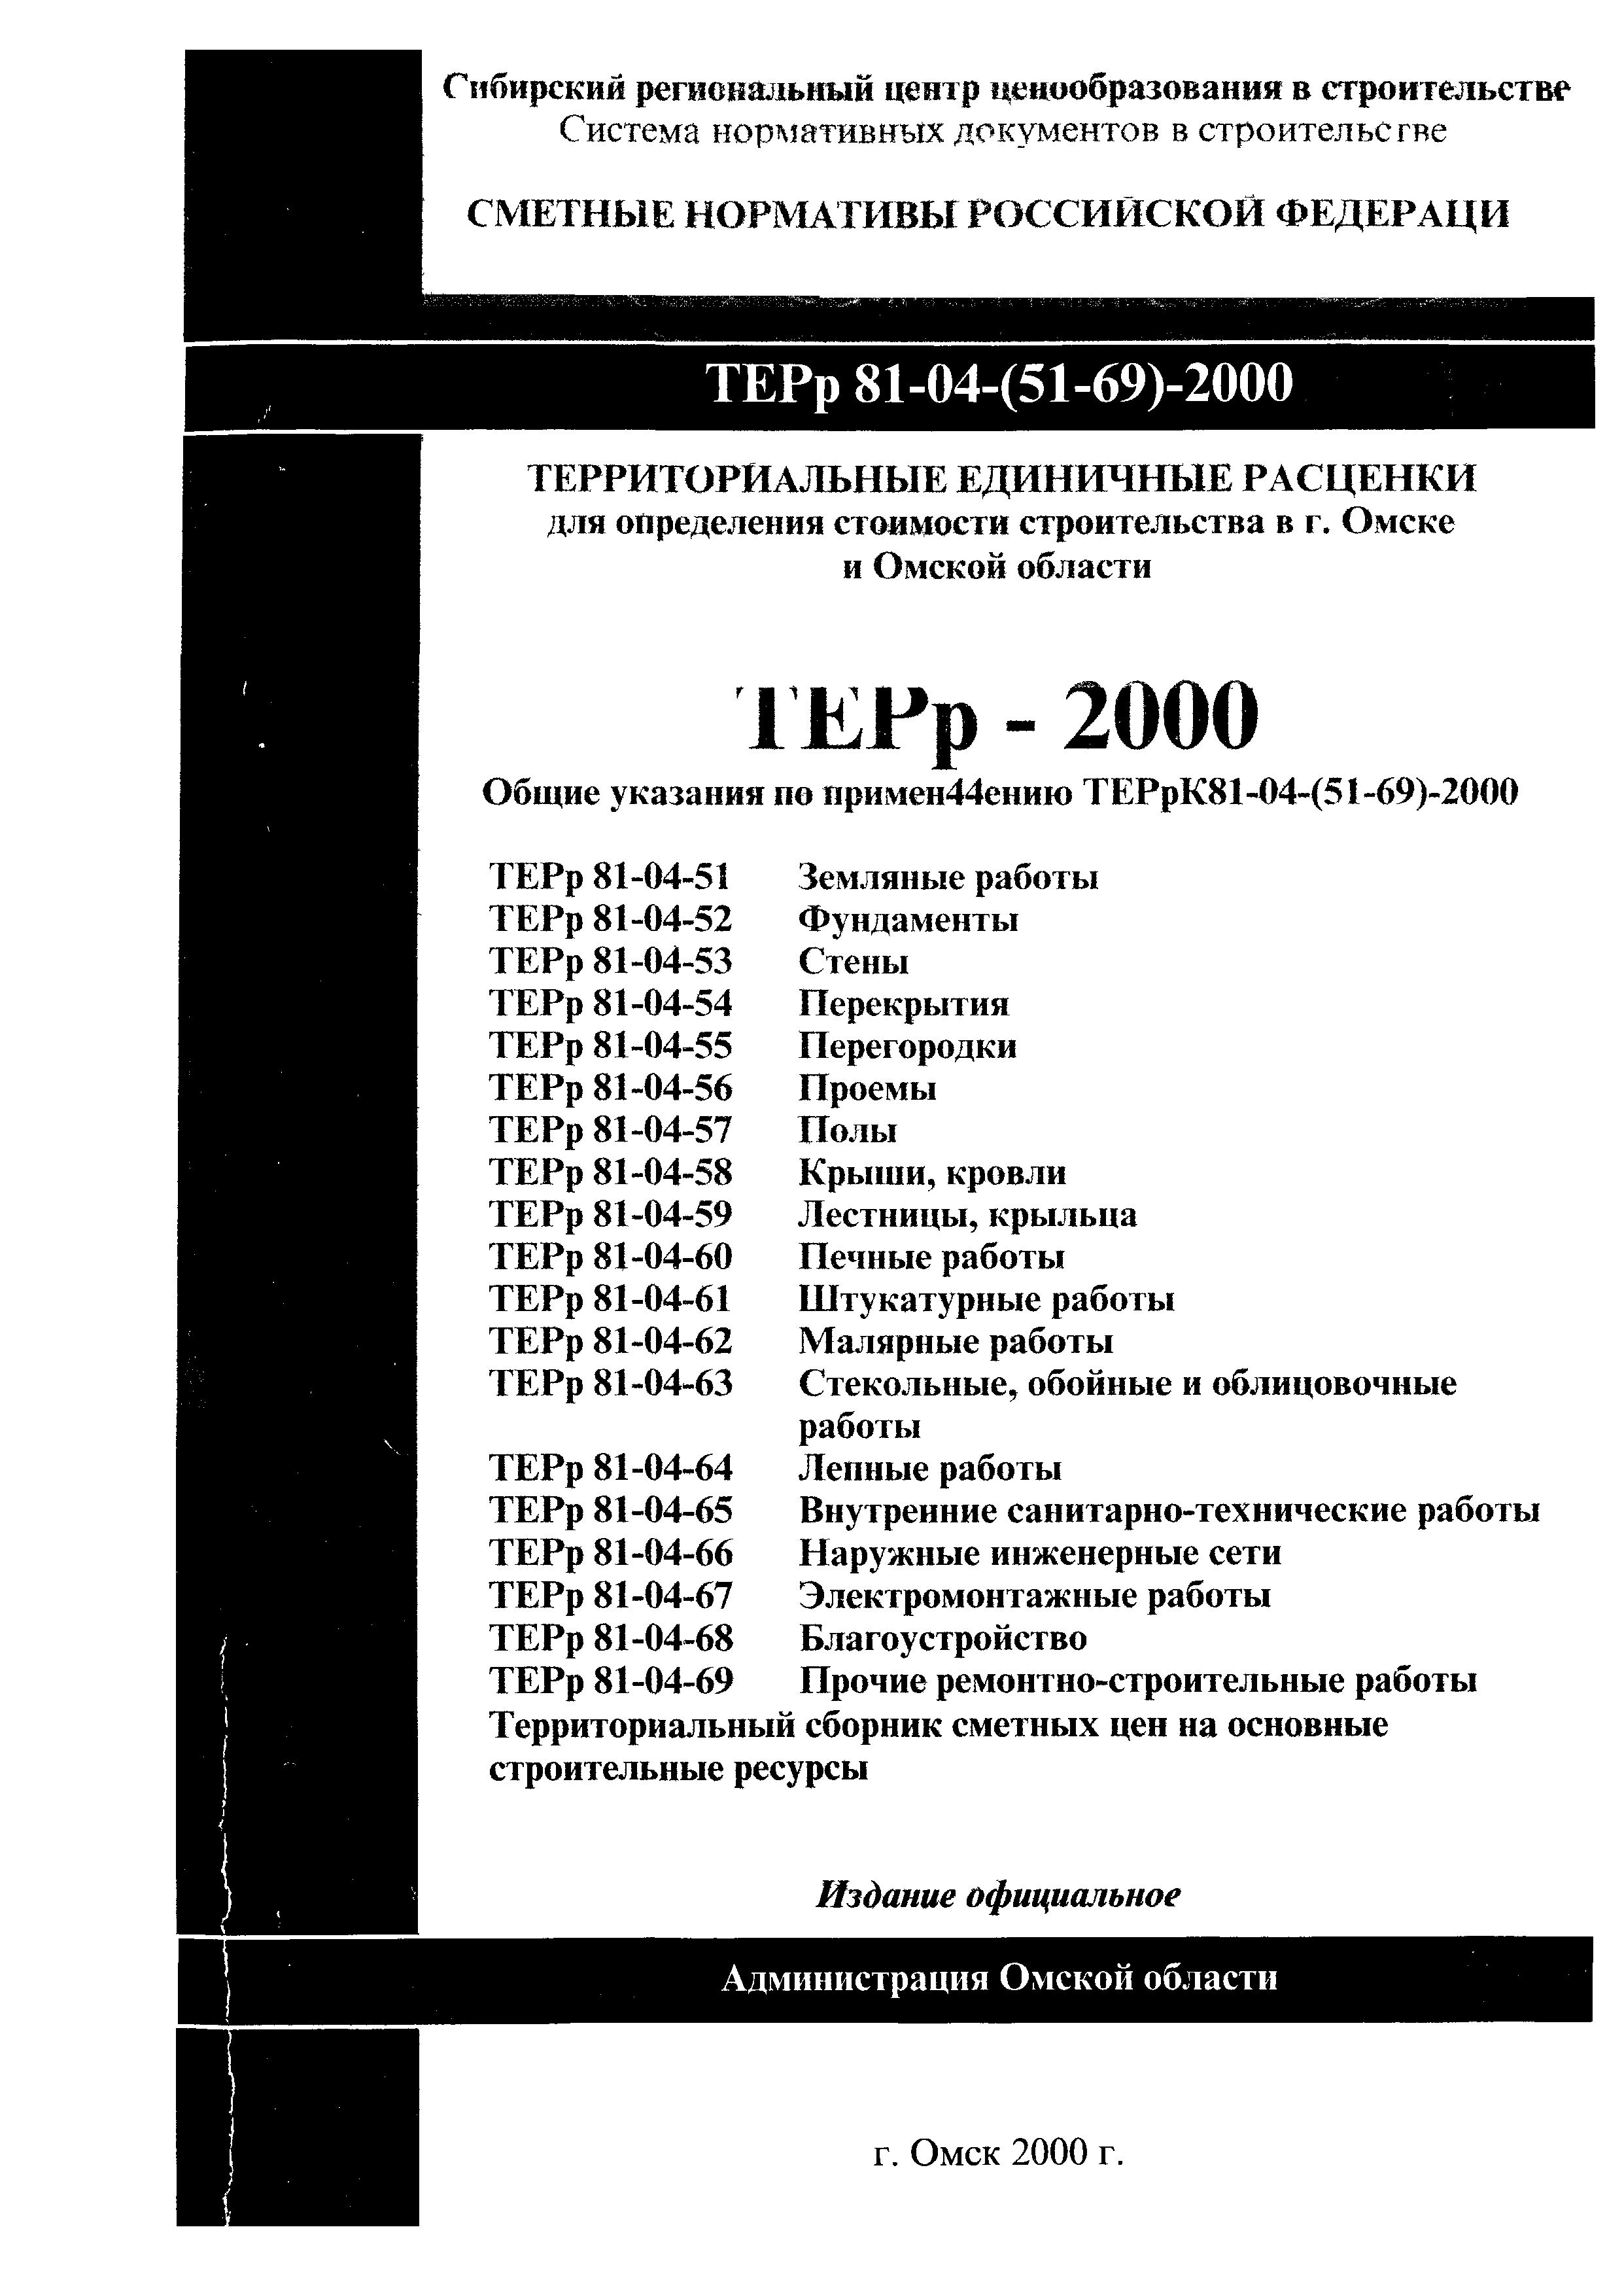 ТЕРр Омской области 2000-51